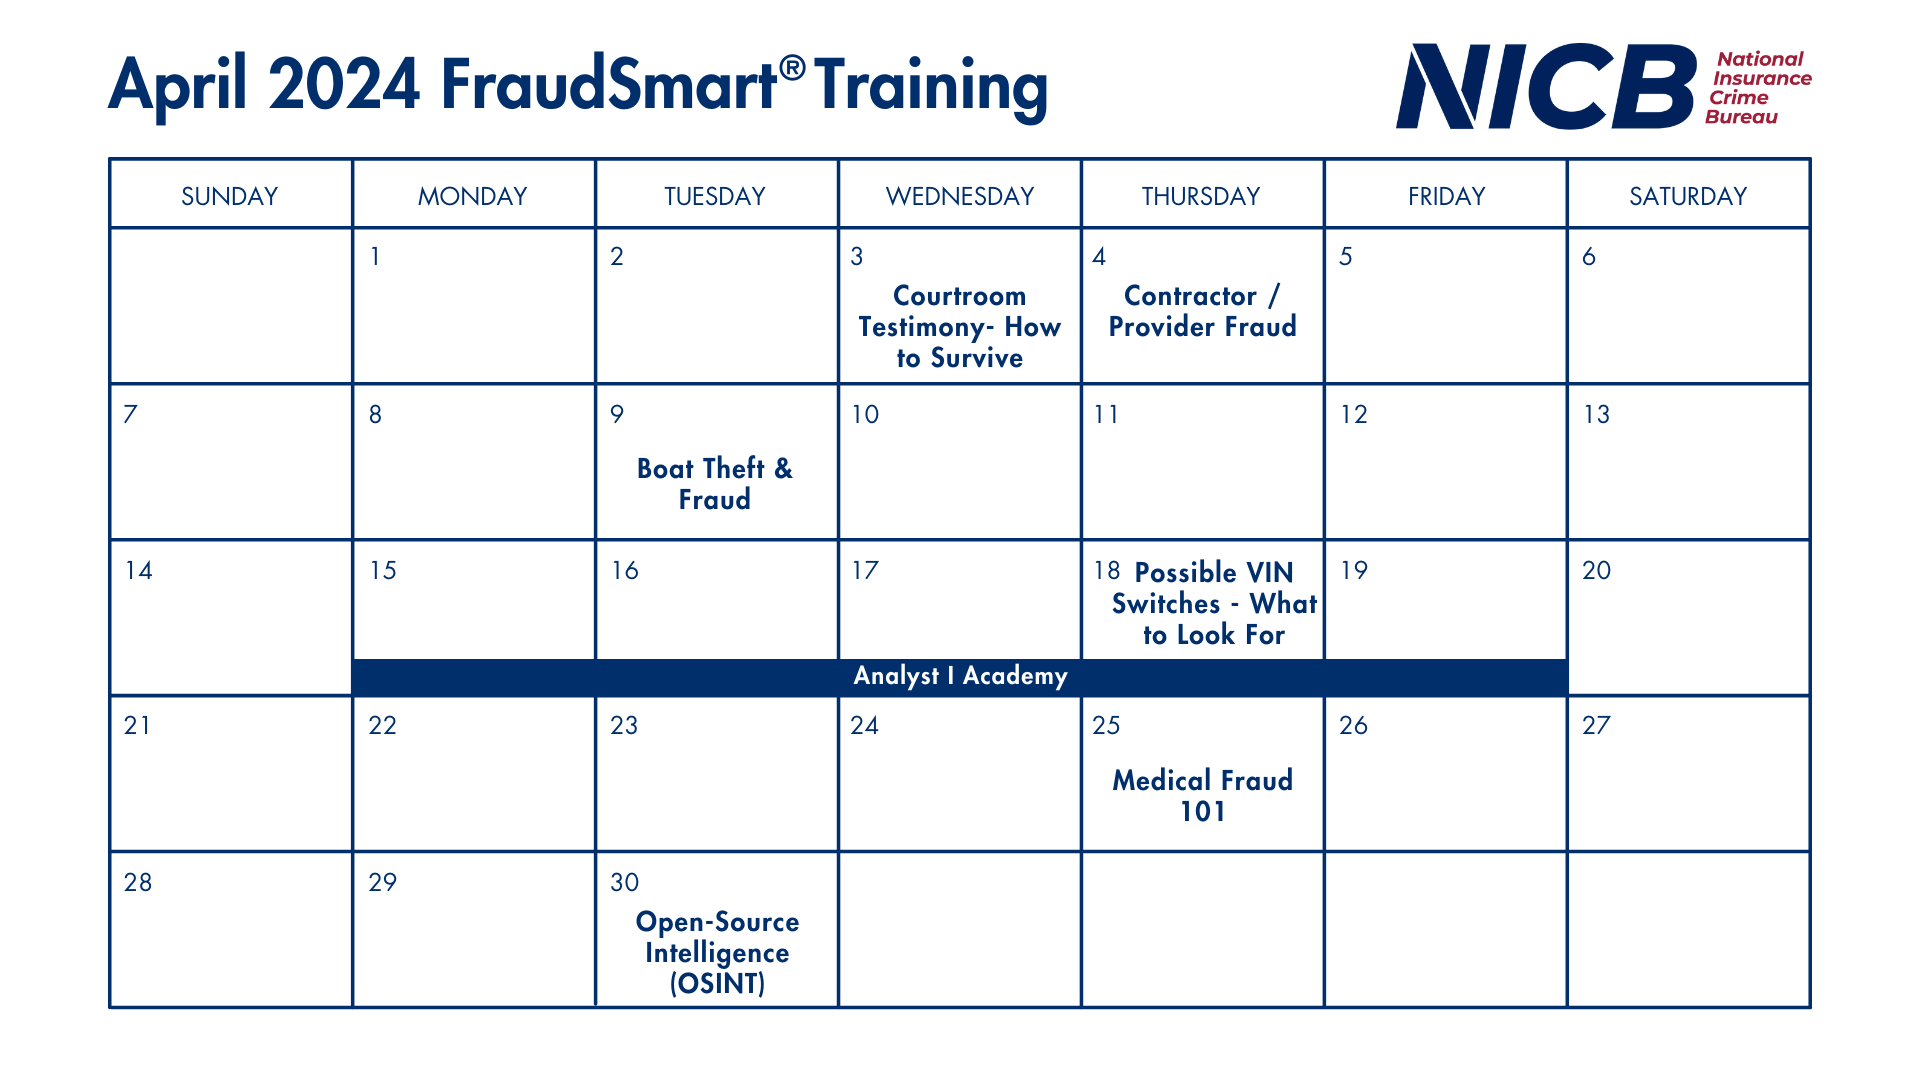 April 2024 FraudSmart Calendar